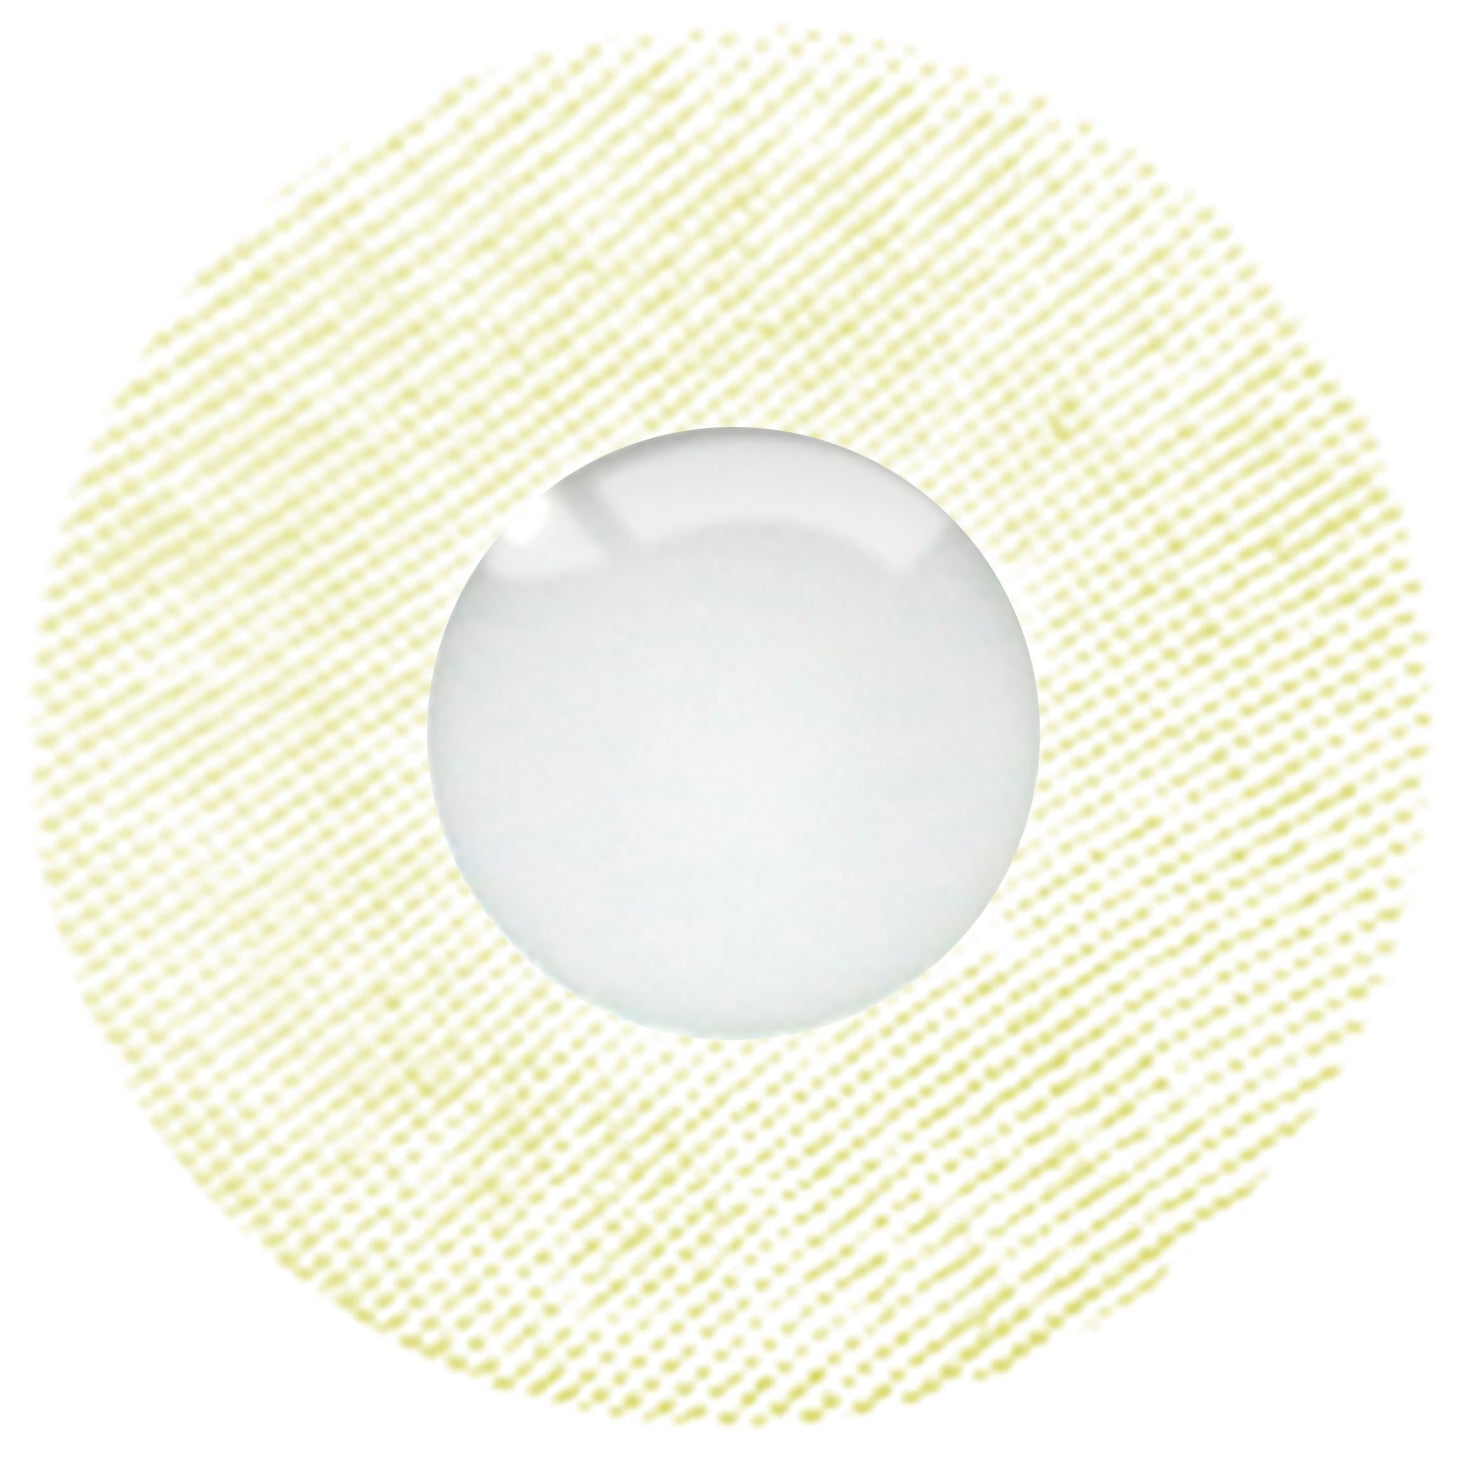 Loox 1 Tone Quartz Grey Cosmetic Contact Lenses, FDA & Health Canada Cleared